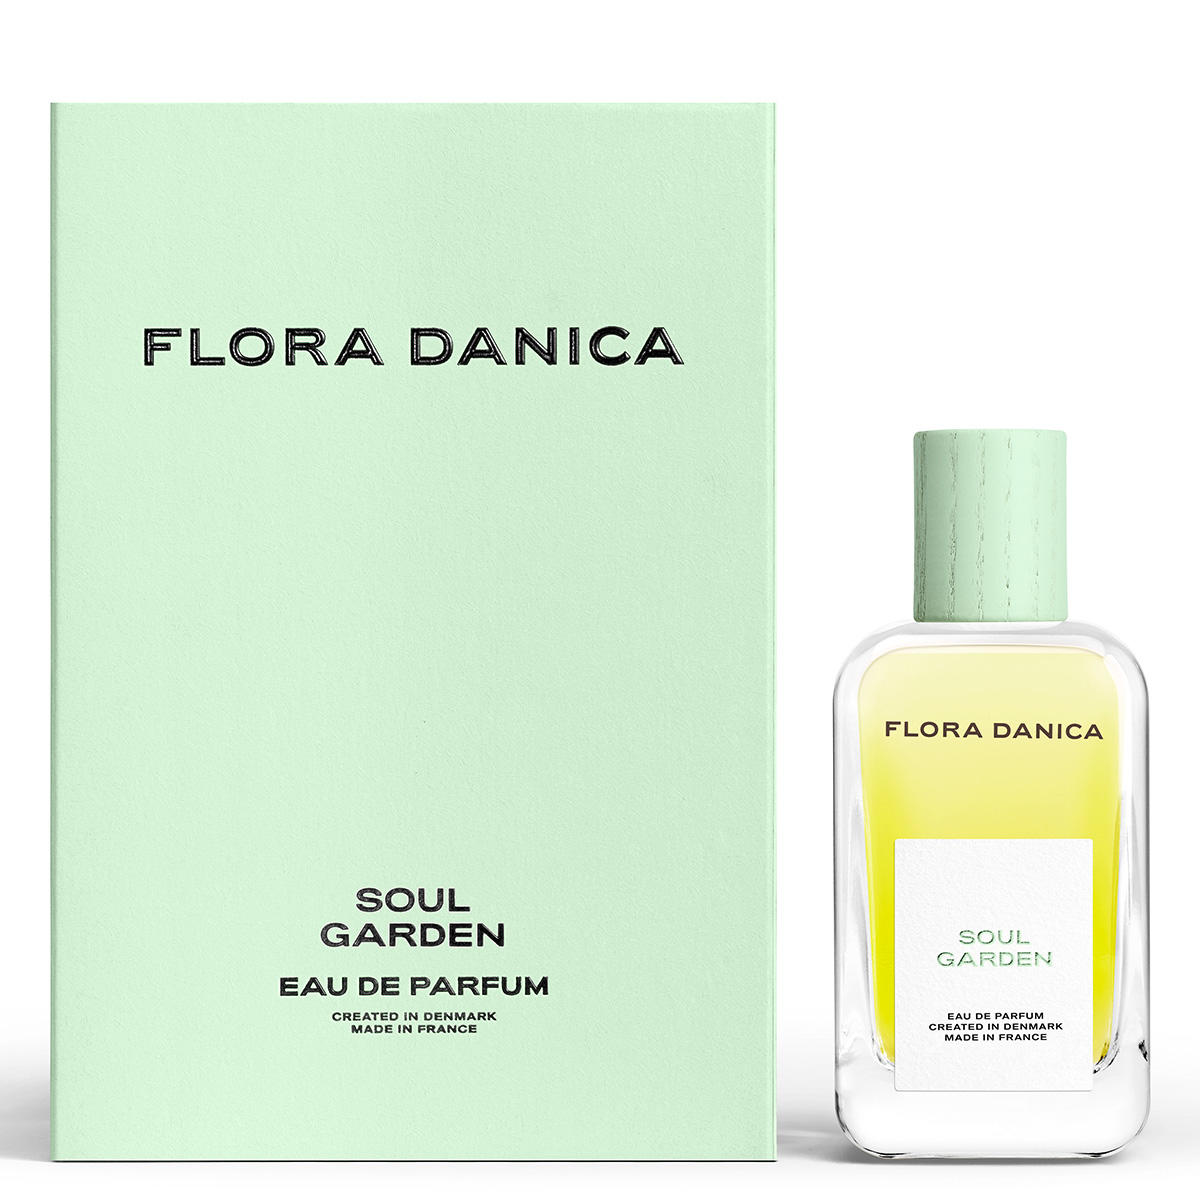 Flora Danica Soul Garden Eau de Parfum 100 ml - 2